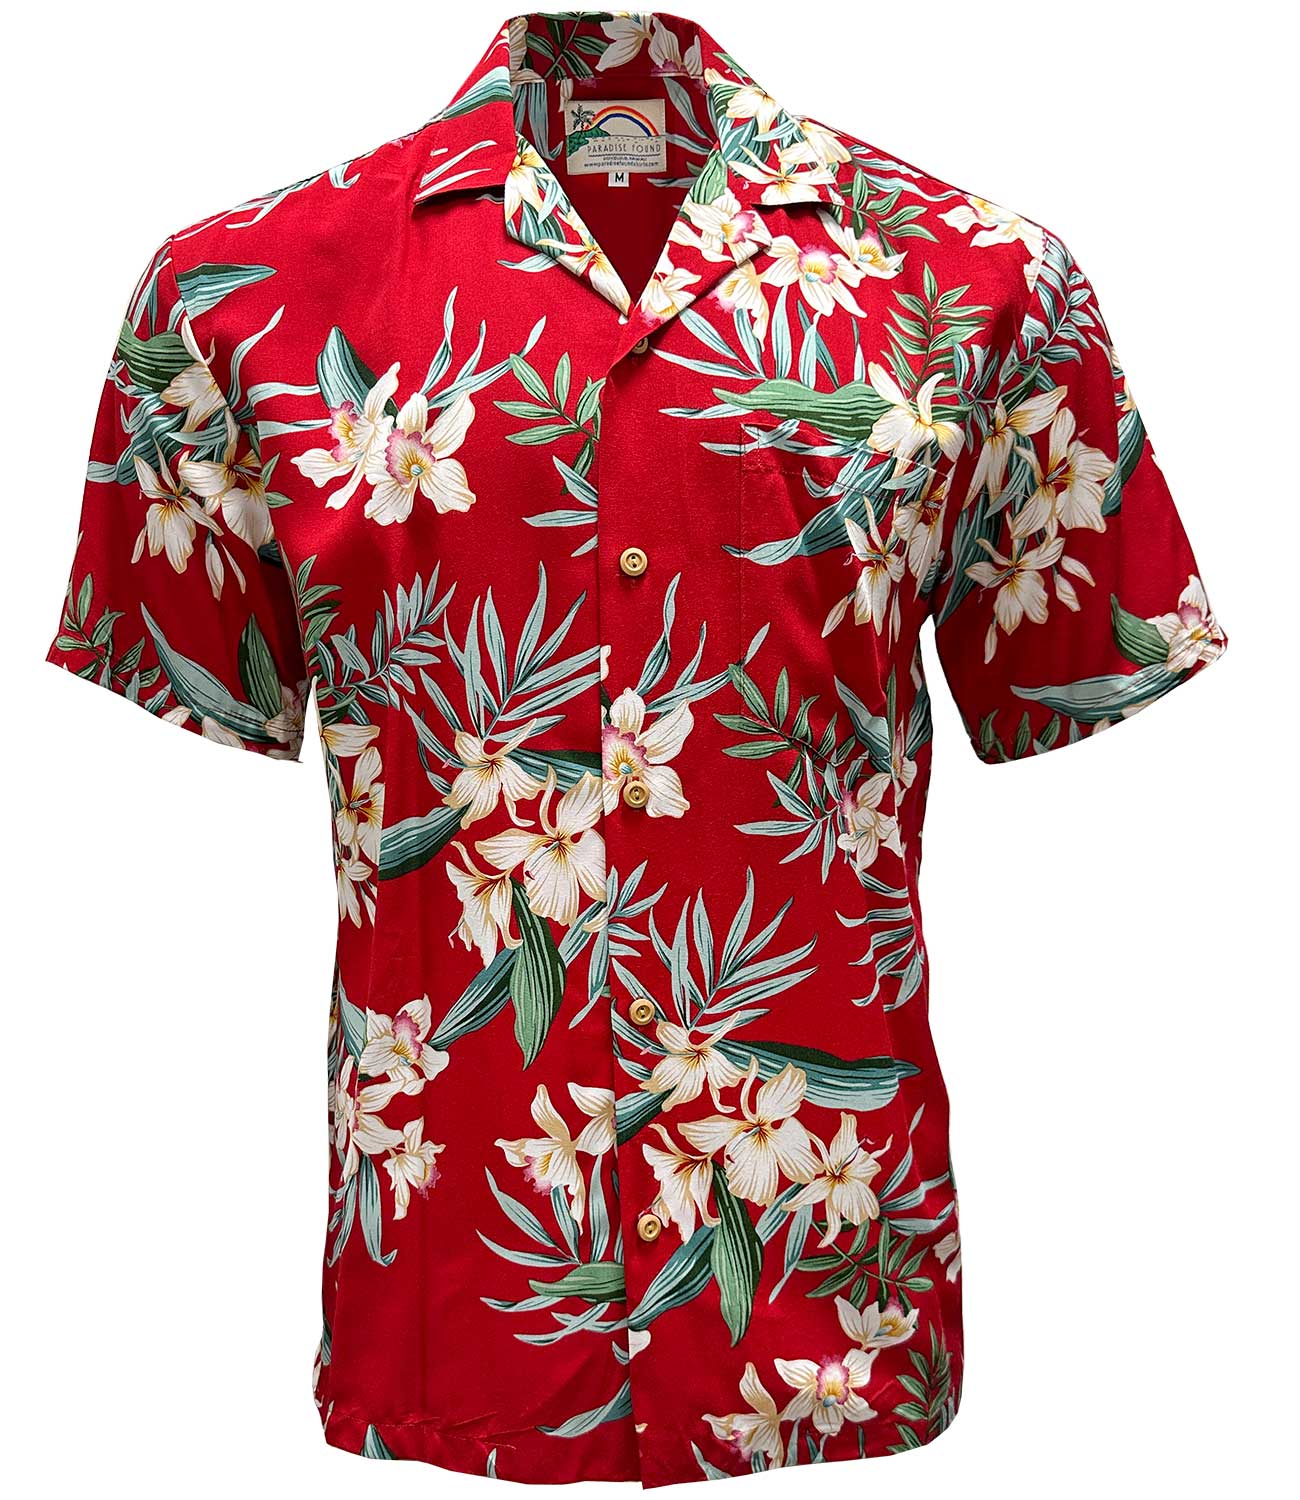 Men's Hawaiian Shirts - Hawaiian Shirts for Men - AlohaFunWear.com